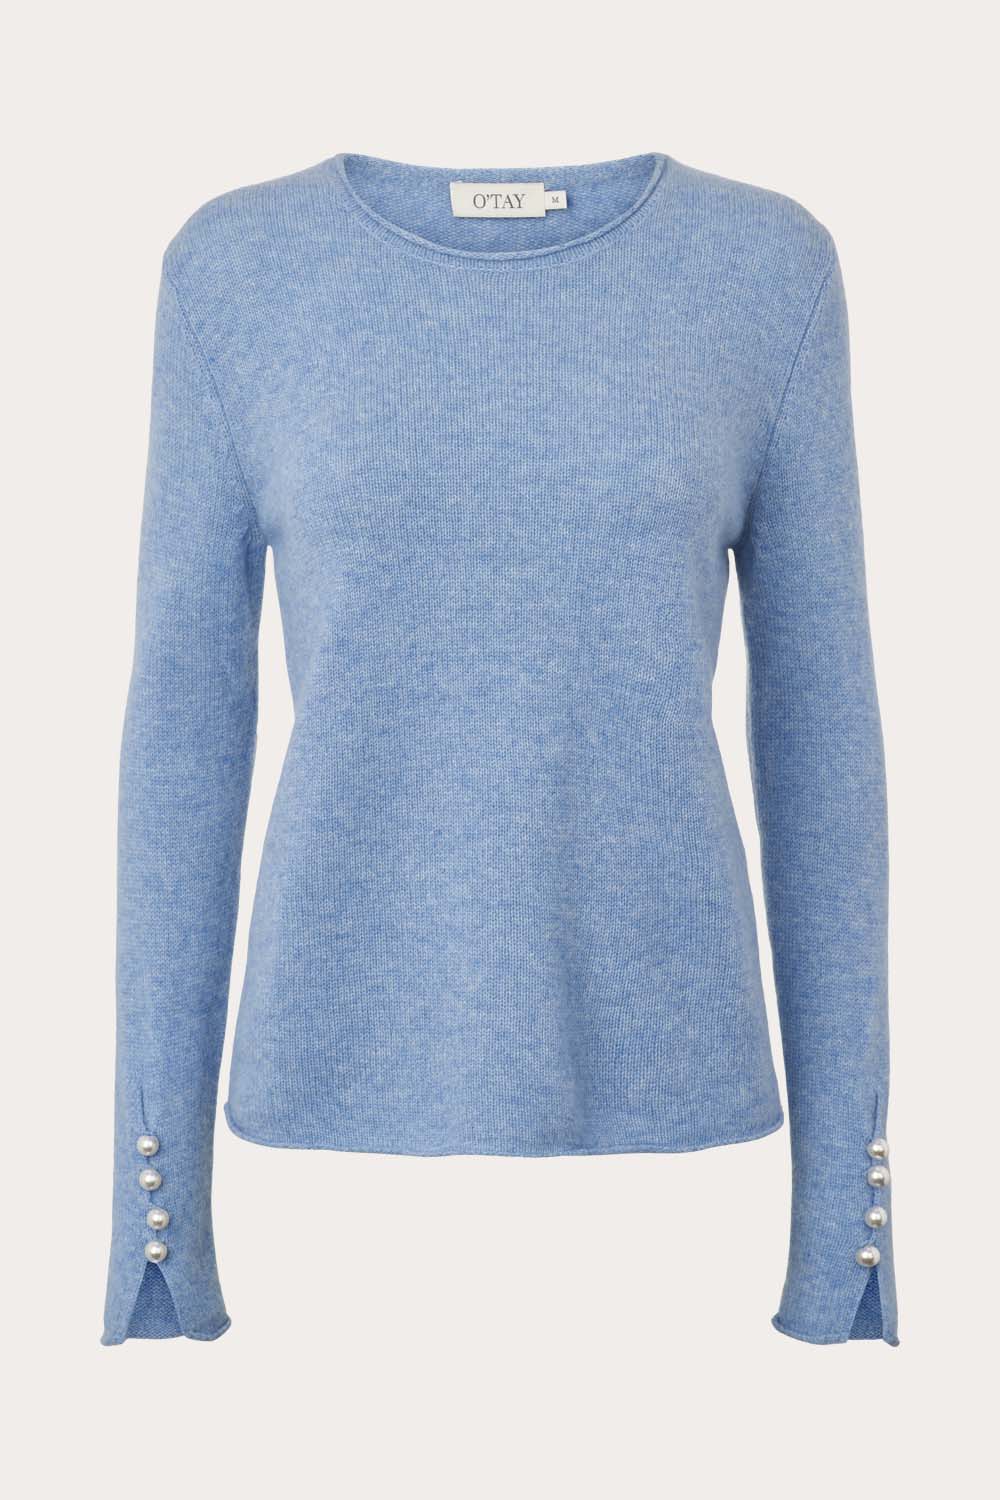 O'TAY Abbelone Sweater Bluser Hortensia